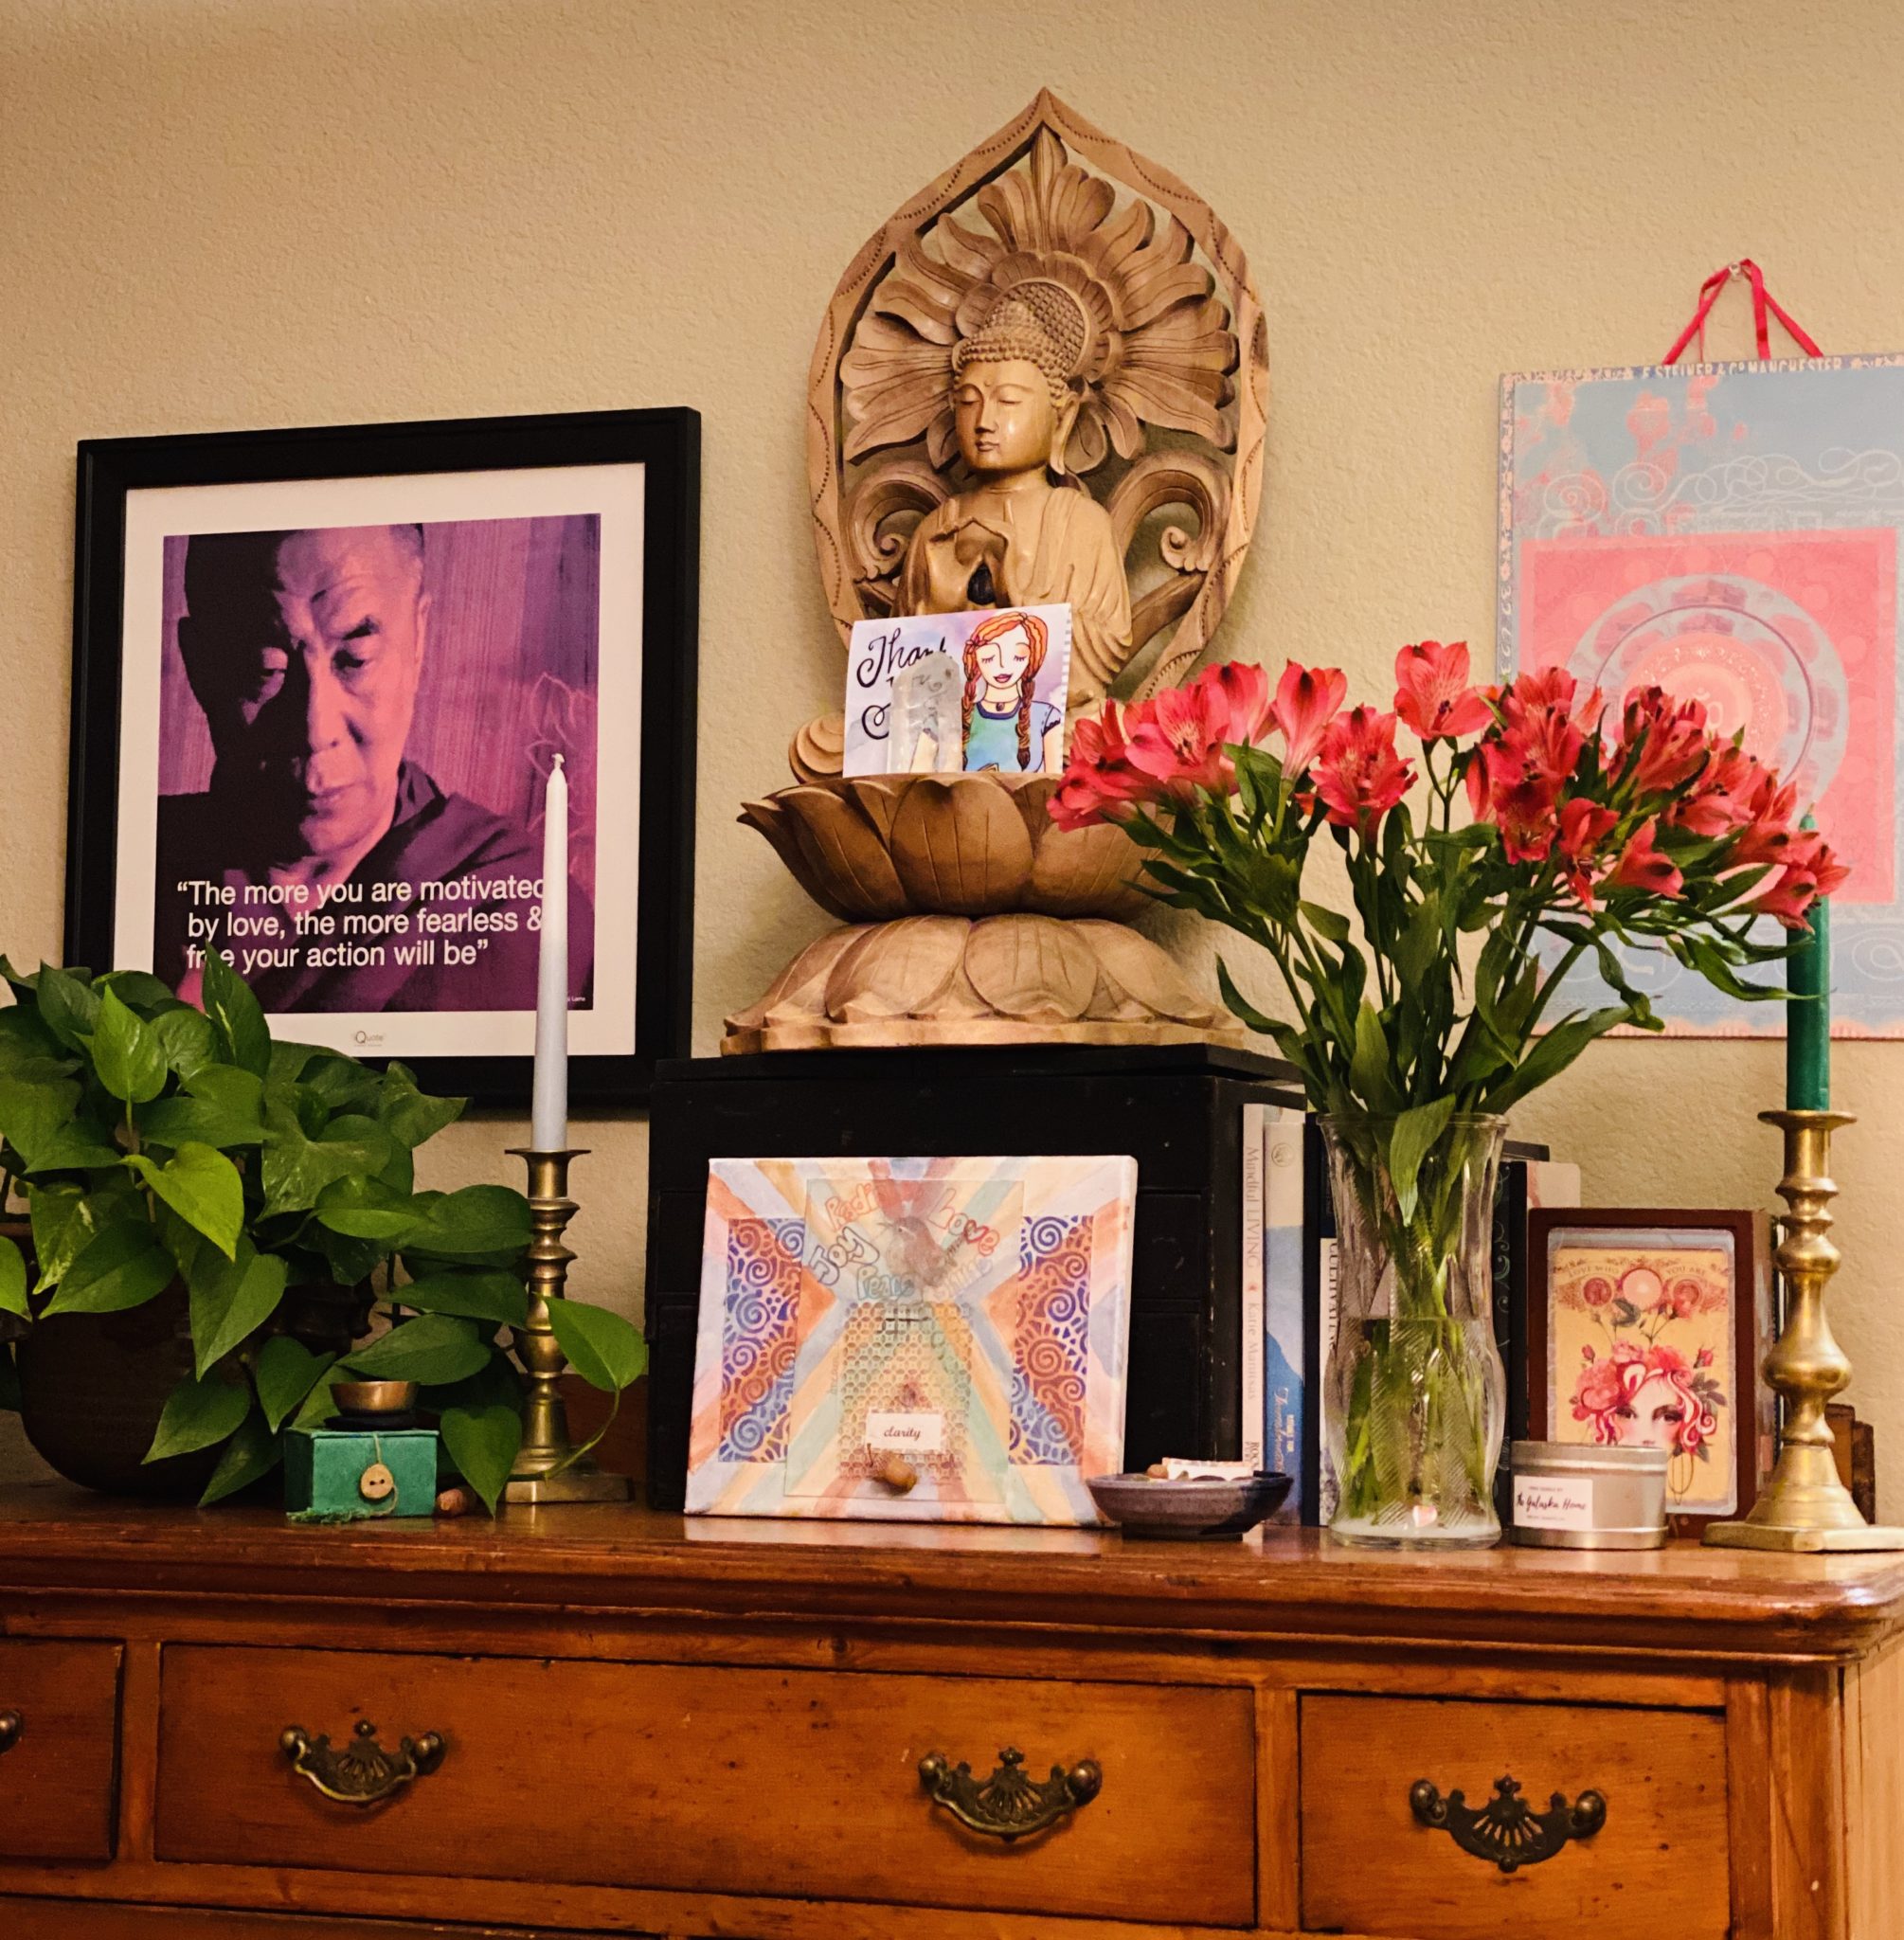 Image of Buddha, art, and flowers representing self-nurturing